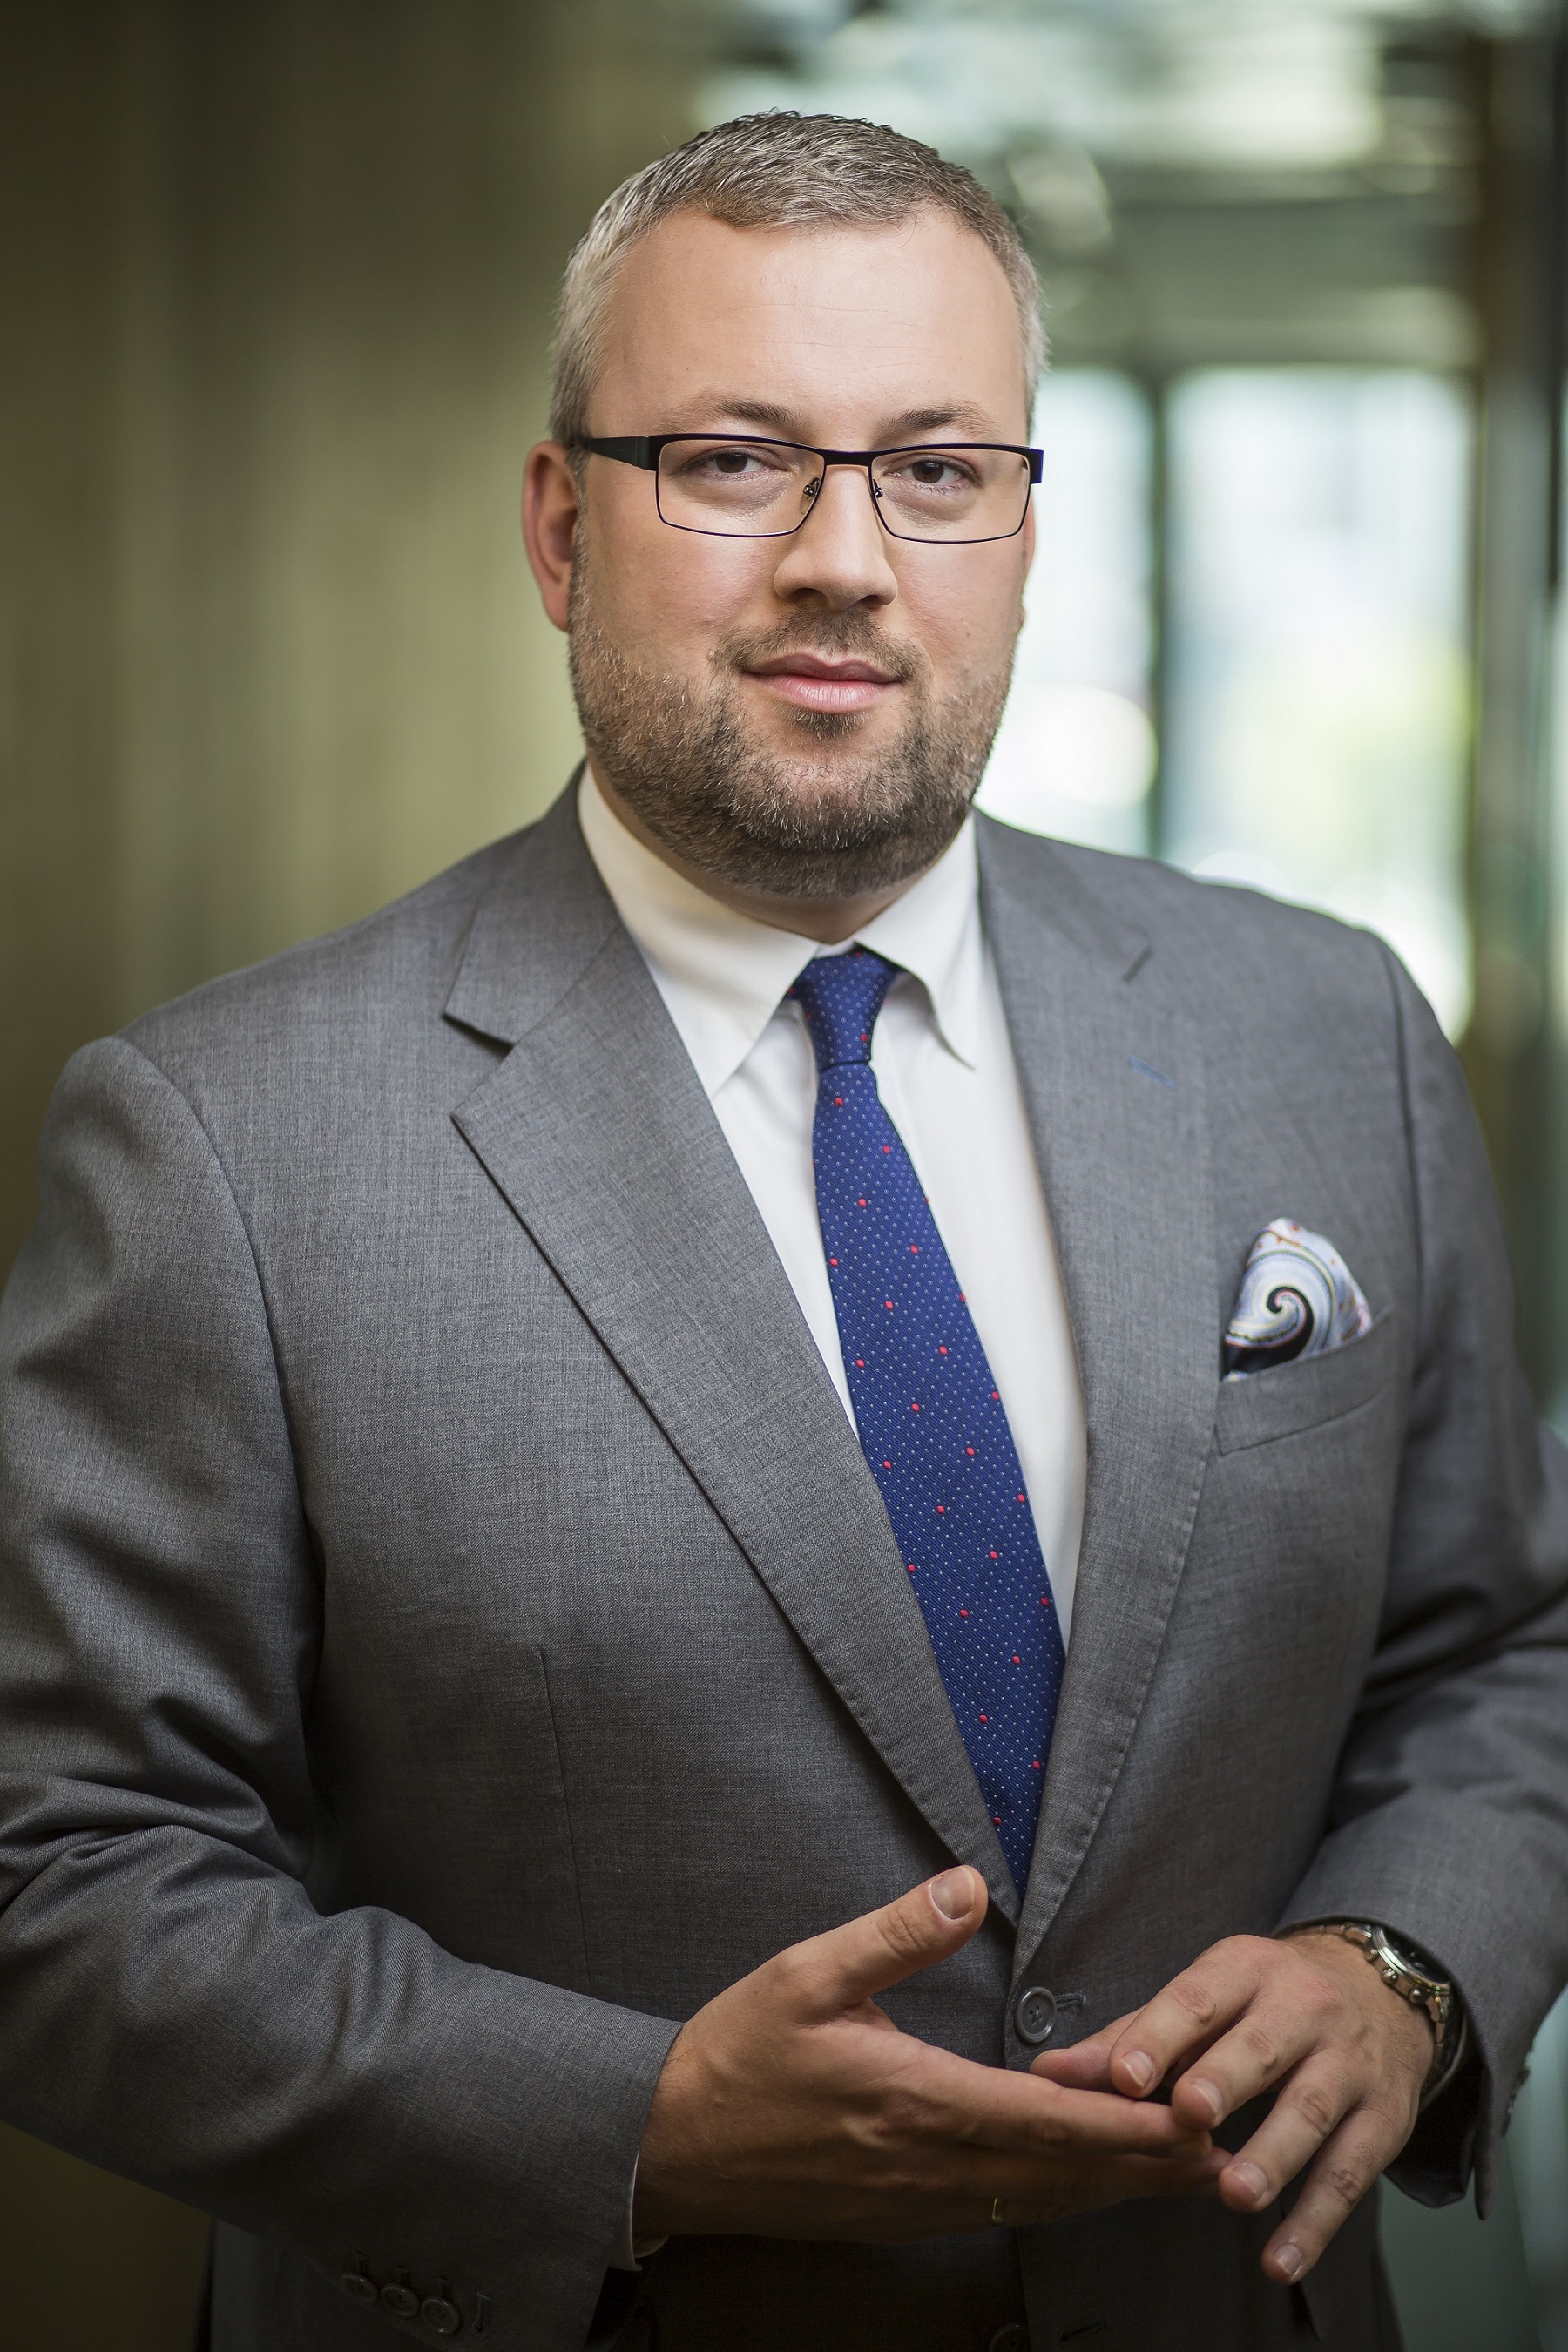 Arkadiusz Rudzki, Managing Director at Skanska Property Poland